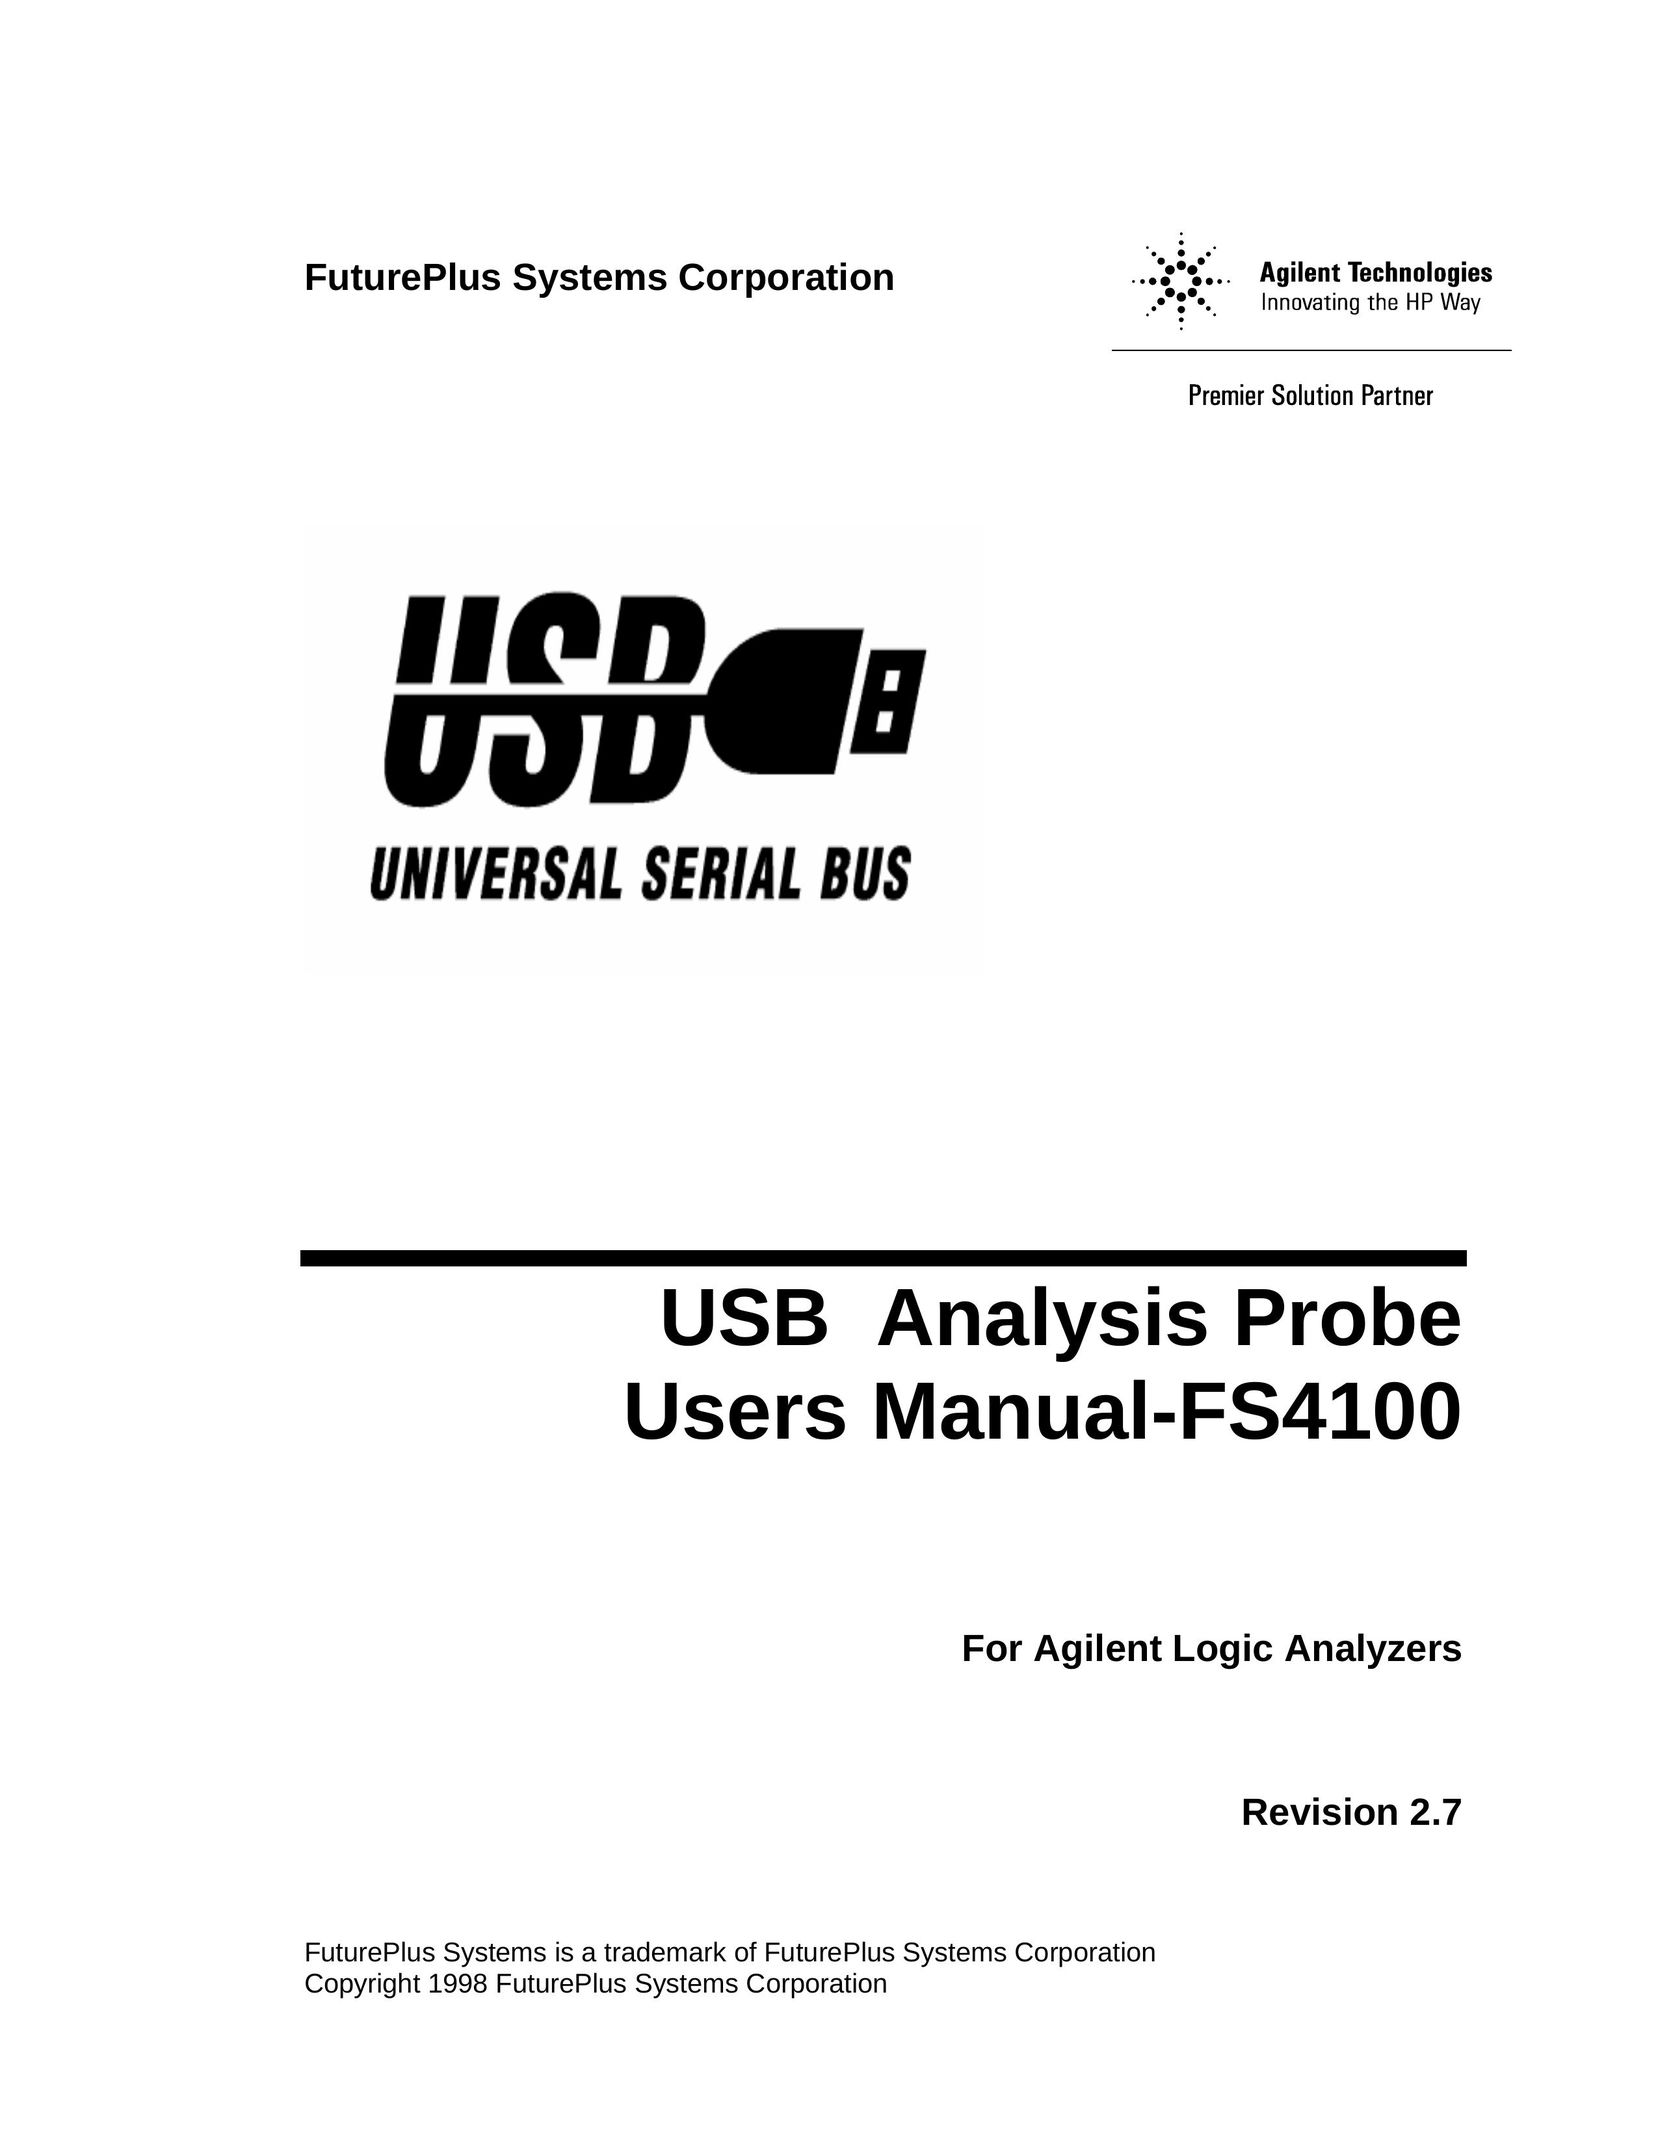 Agilent Technologies FS4100 Computer Drive User Manual